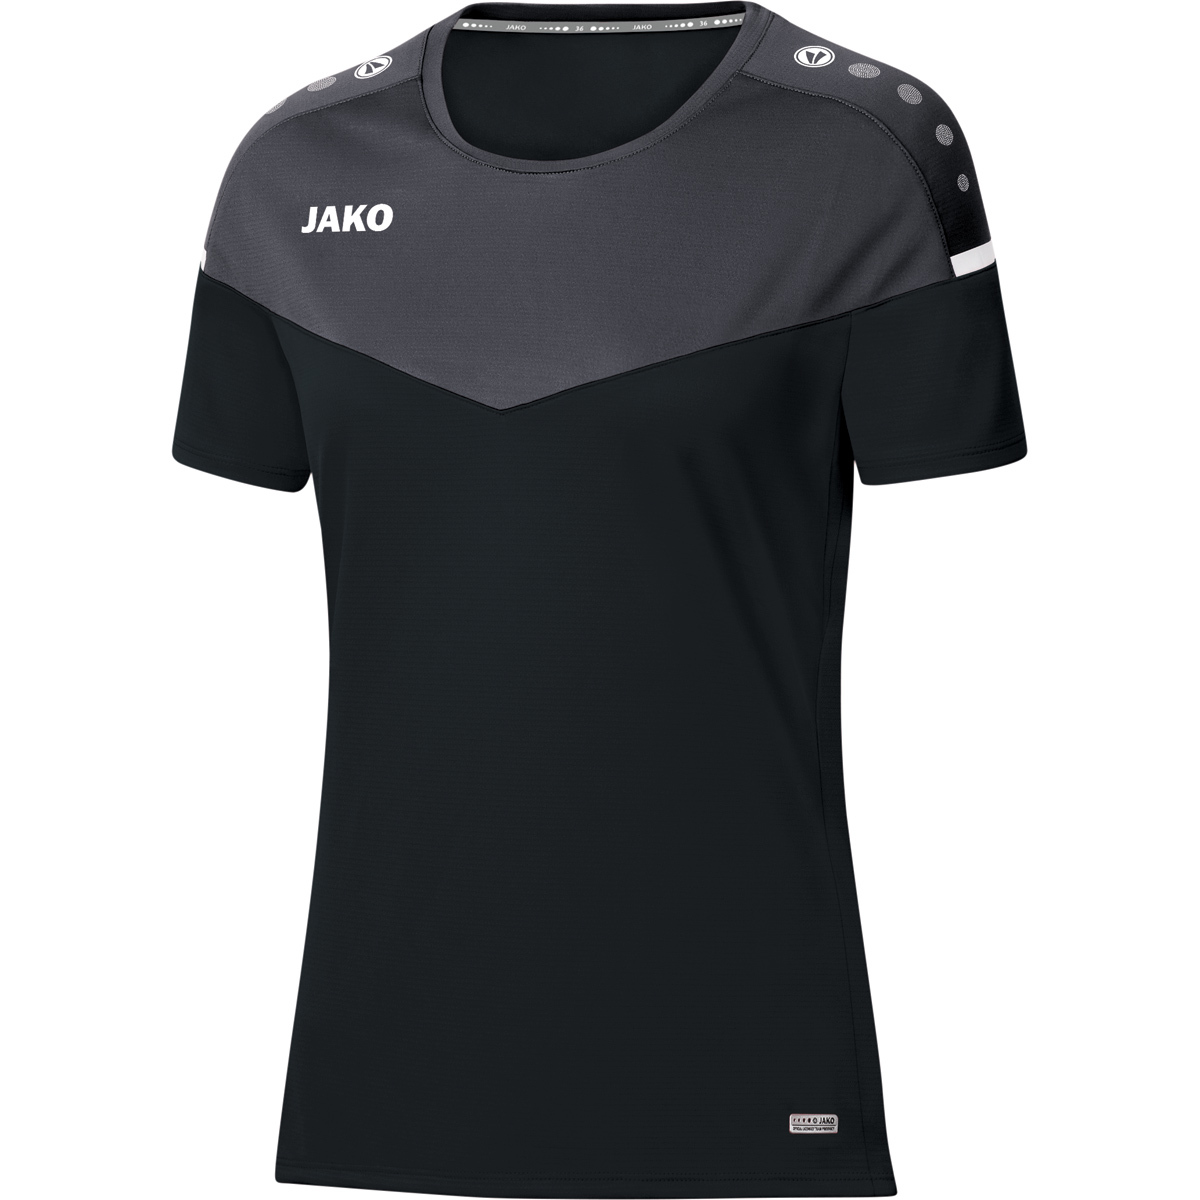 JAKO T-Shirt 2.0 44, 6120 schwarz/anthrazit, Damen, Champ Gr